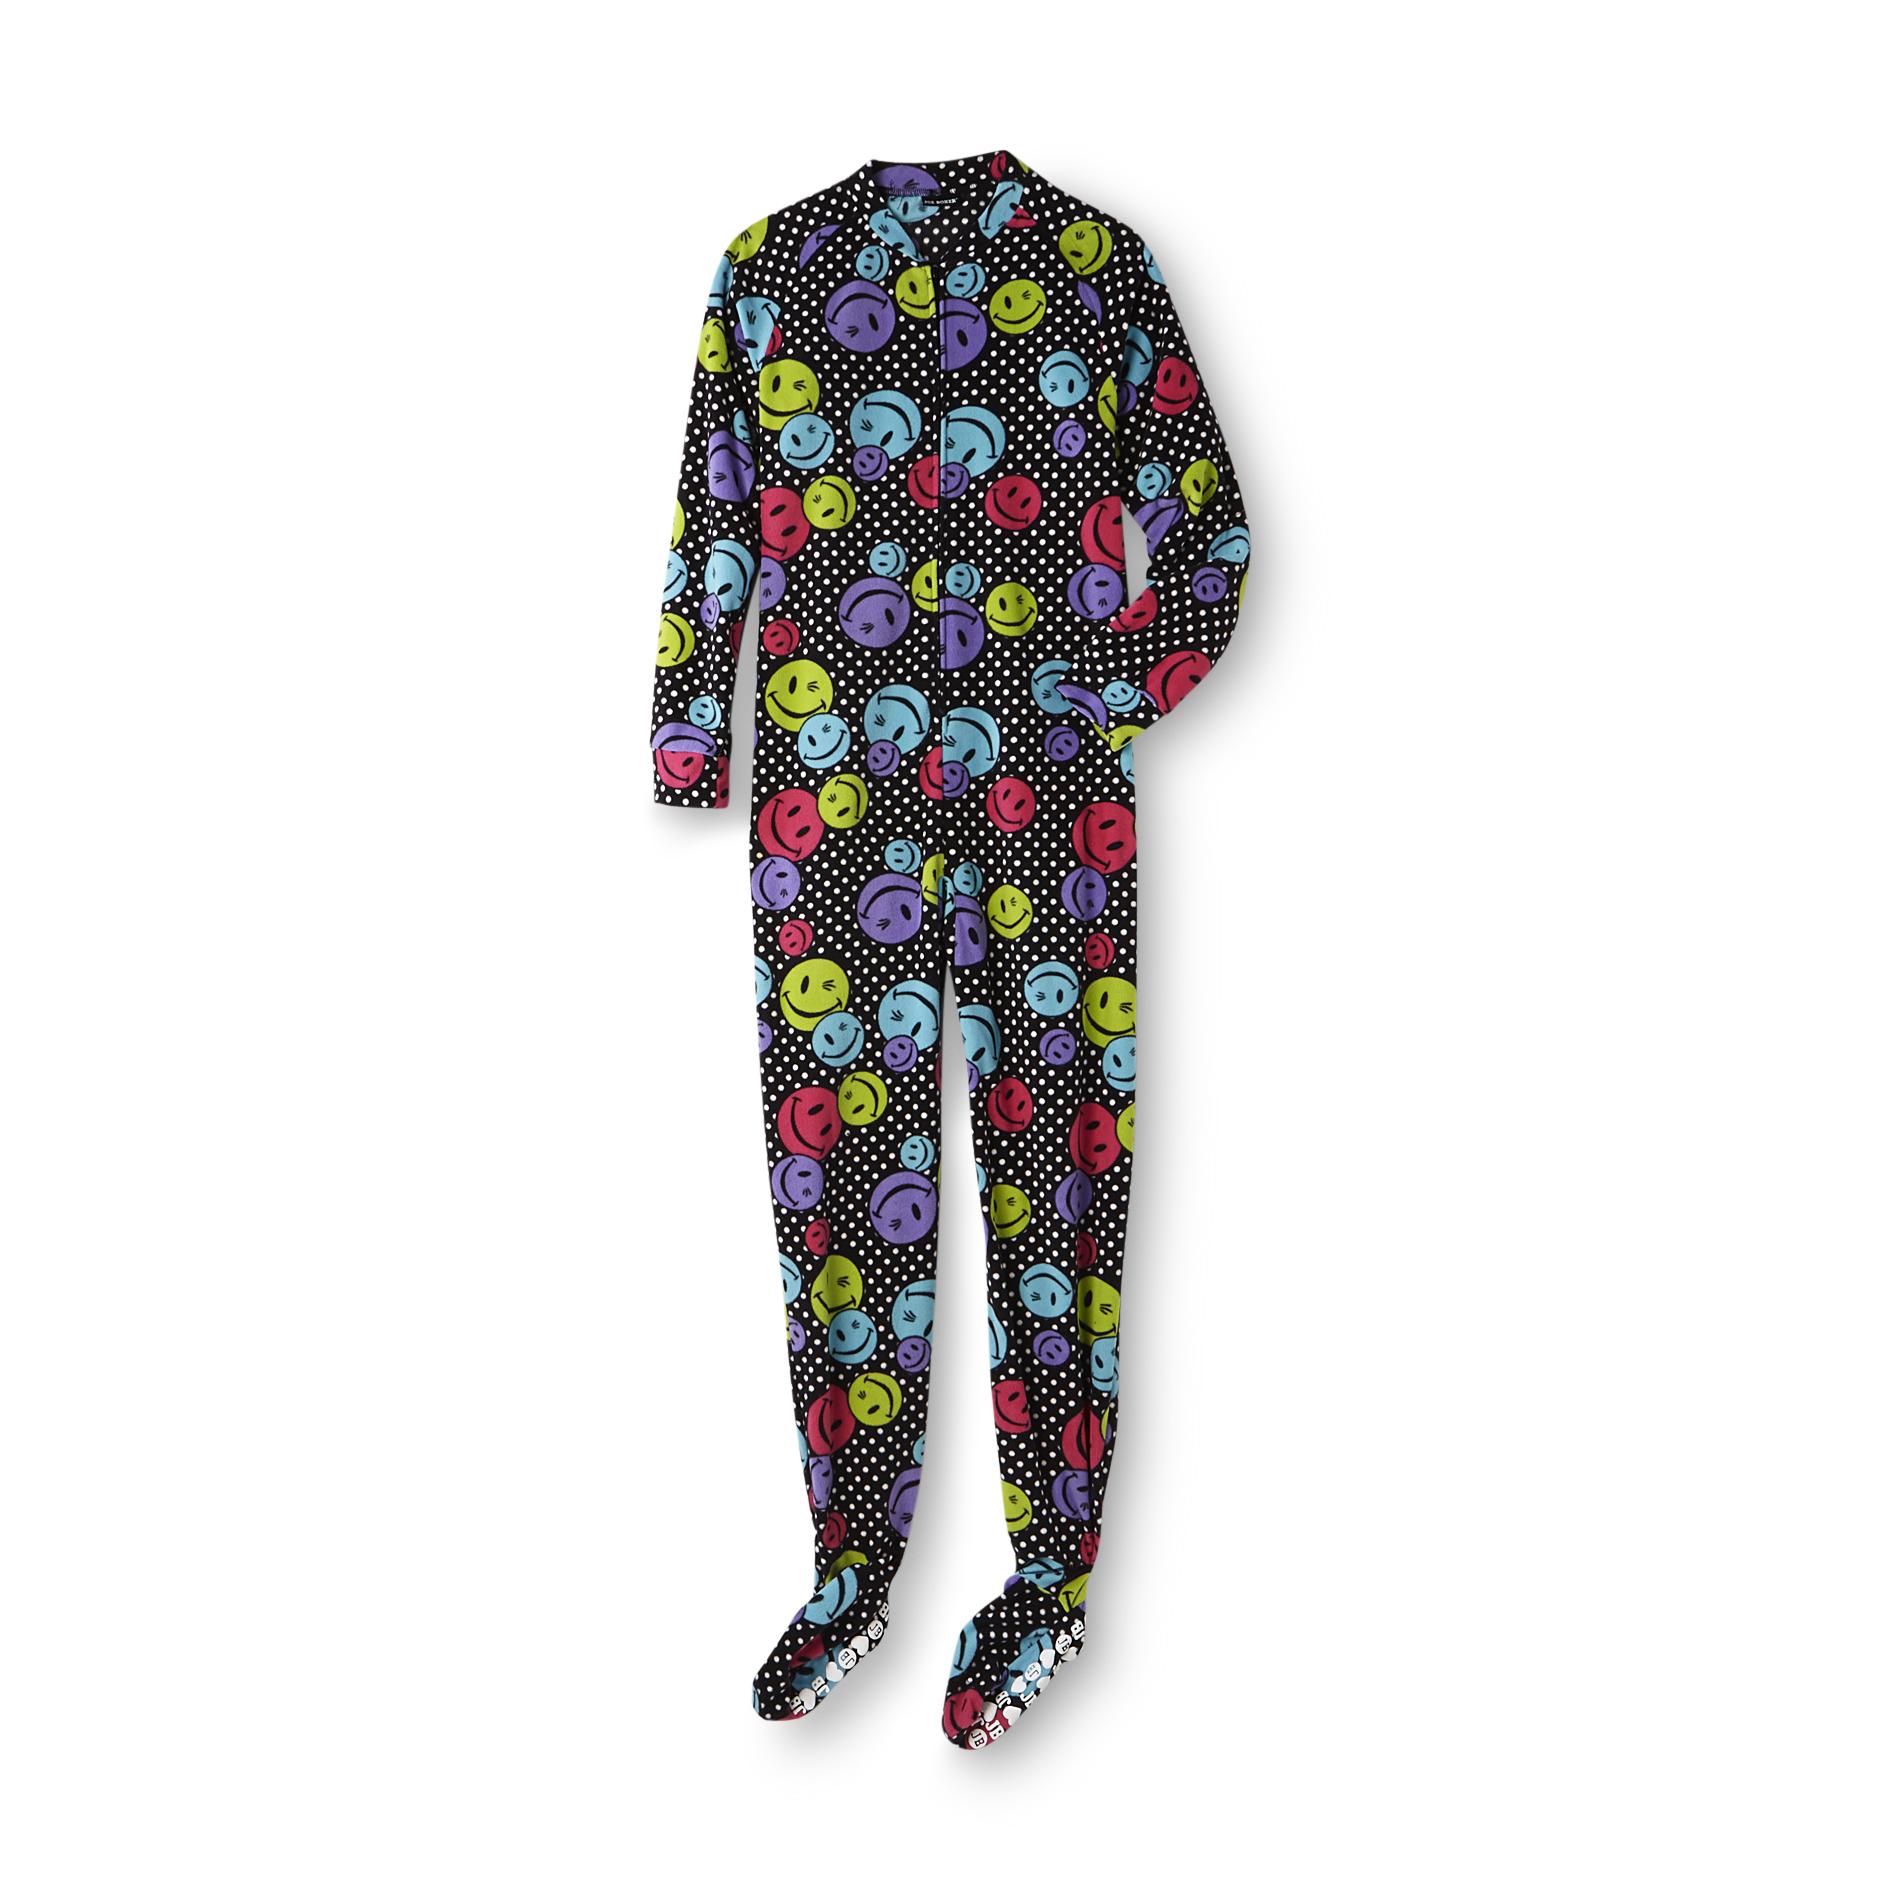 Joe Boxer Women's Fleece Footed Pajamas - Polka Dot